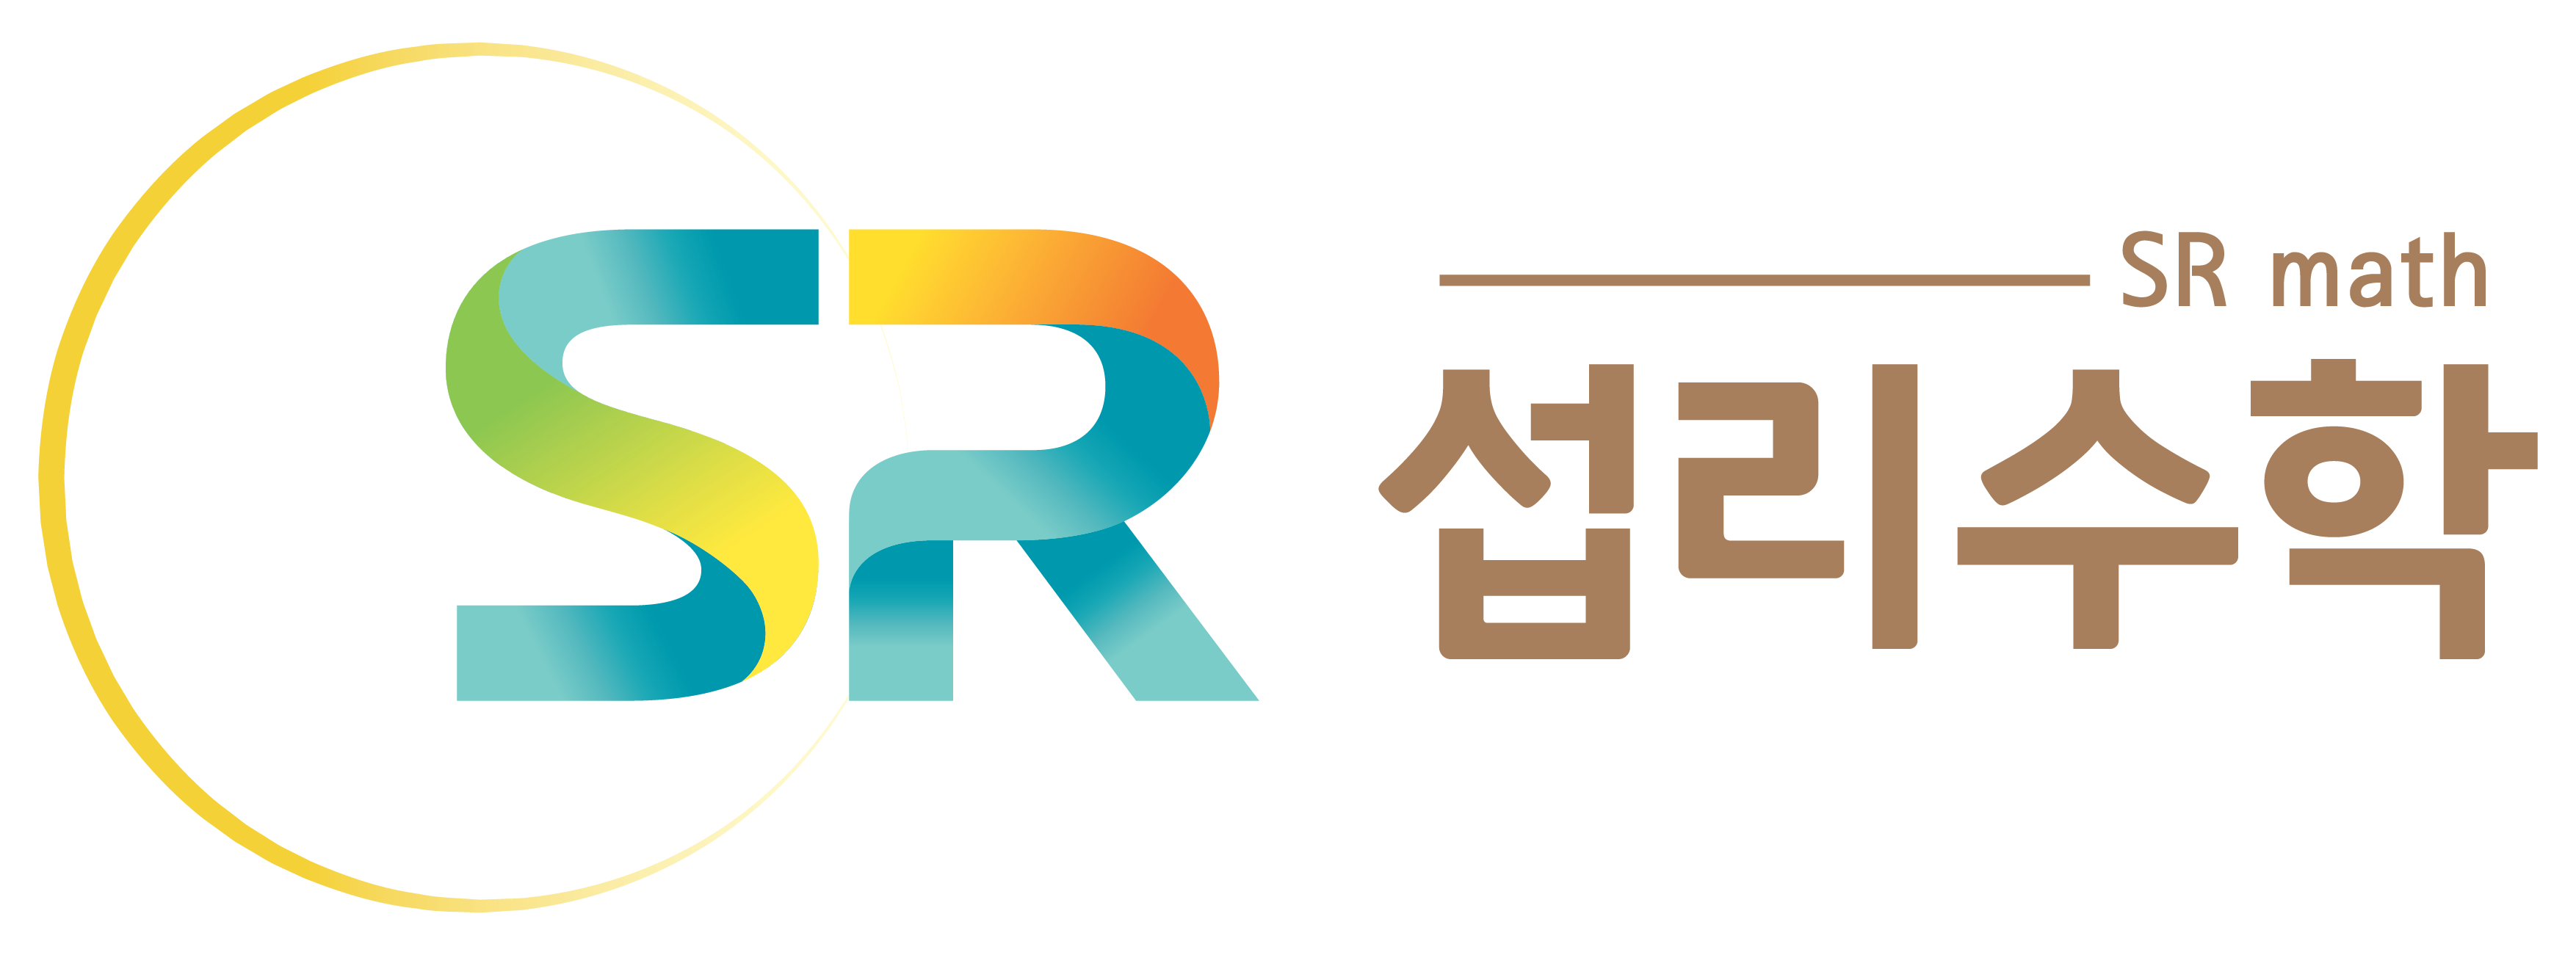 SR MATH logo image